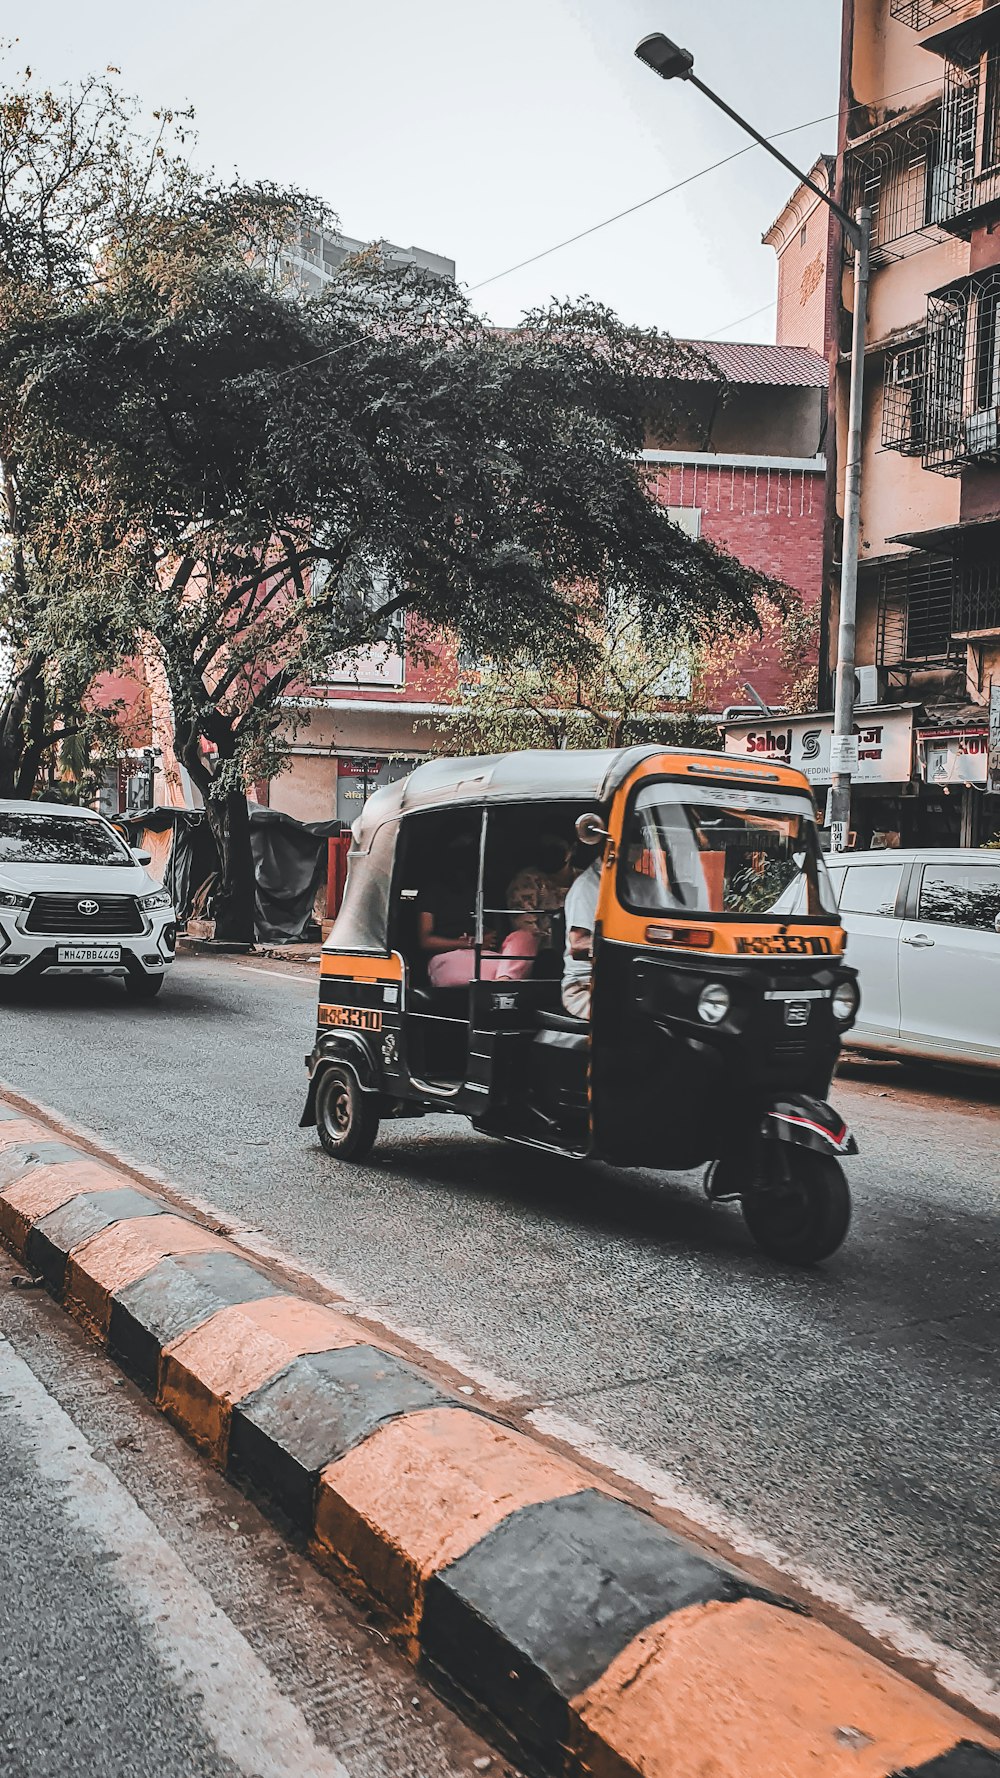 a tuk tuk driving down a city street